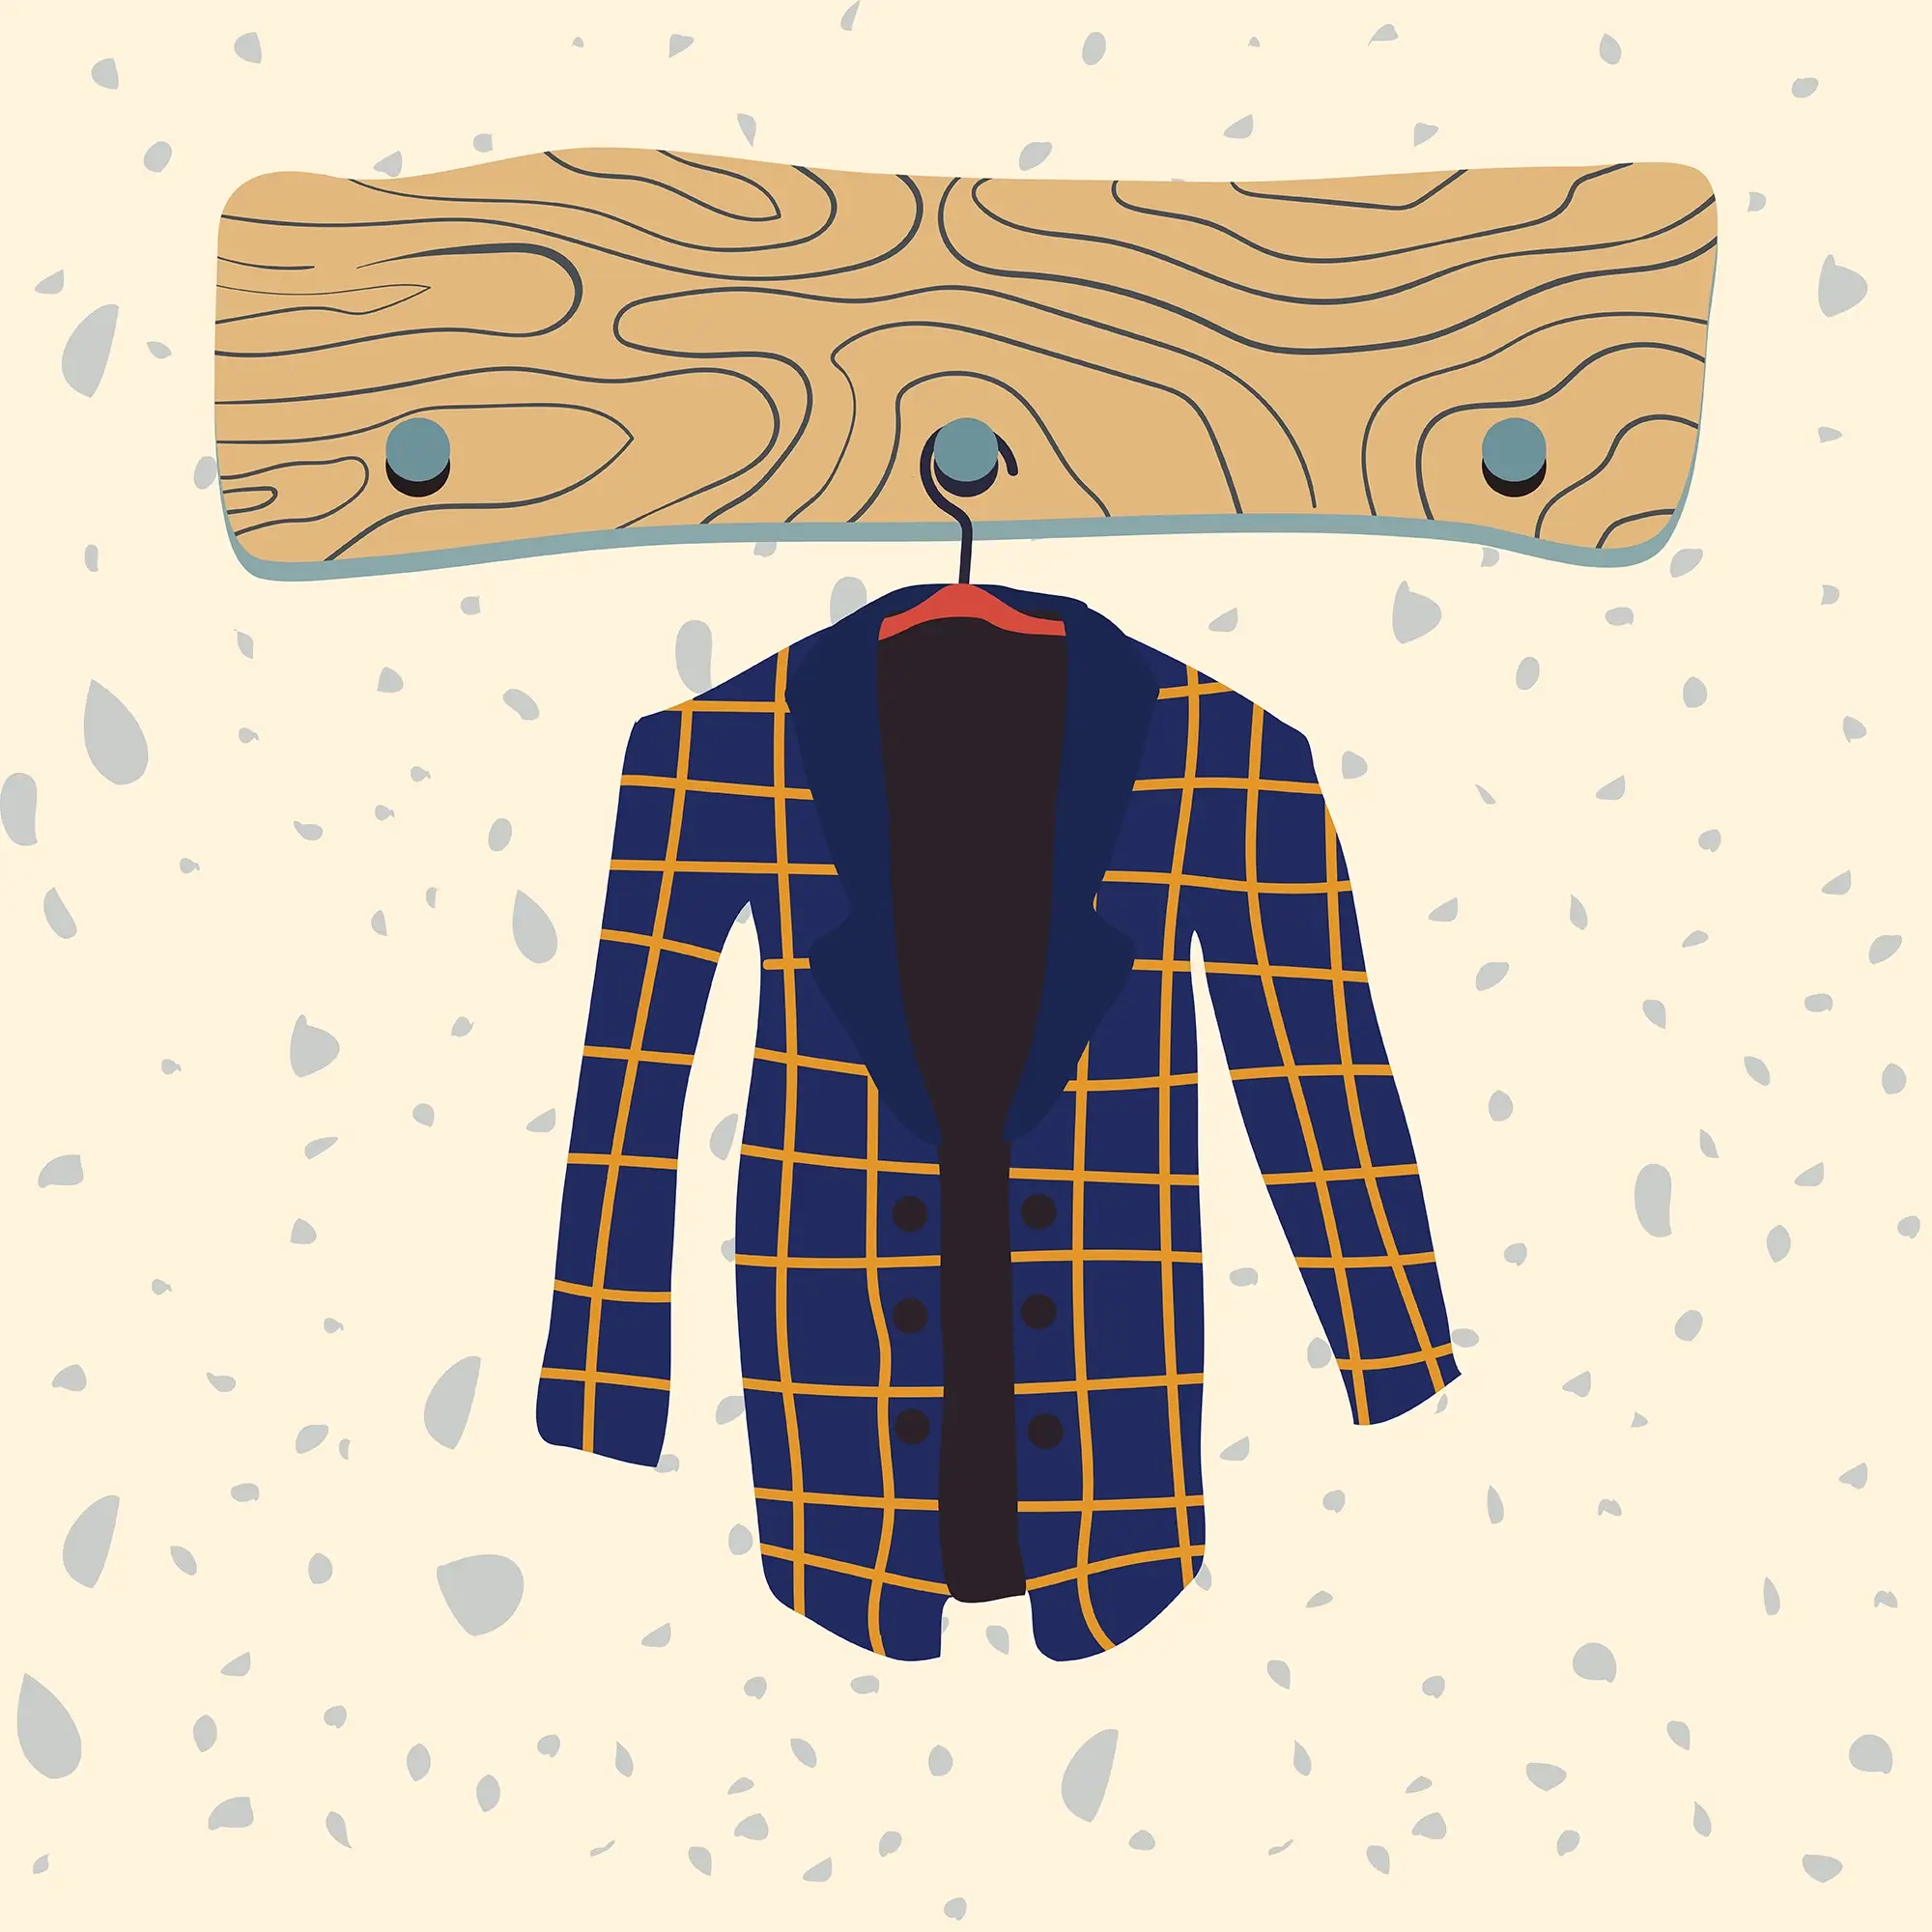 Illustration: A straightforward representation of a coat hanging gracefully on a hanger. Created by Milena Stanisavljevic. Explore more at miletart.com.